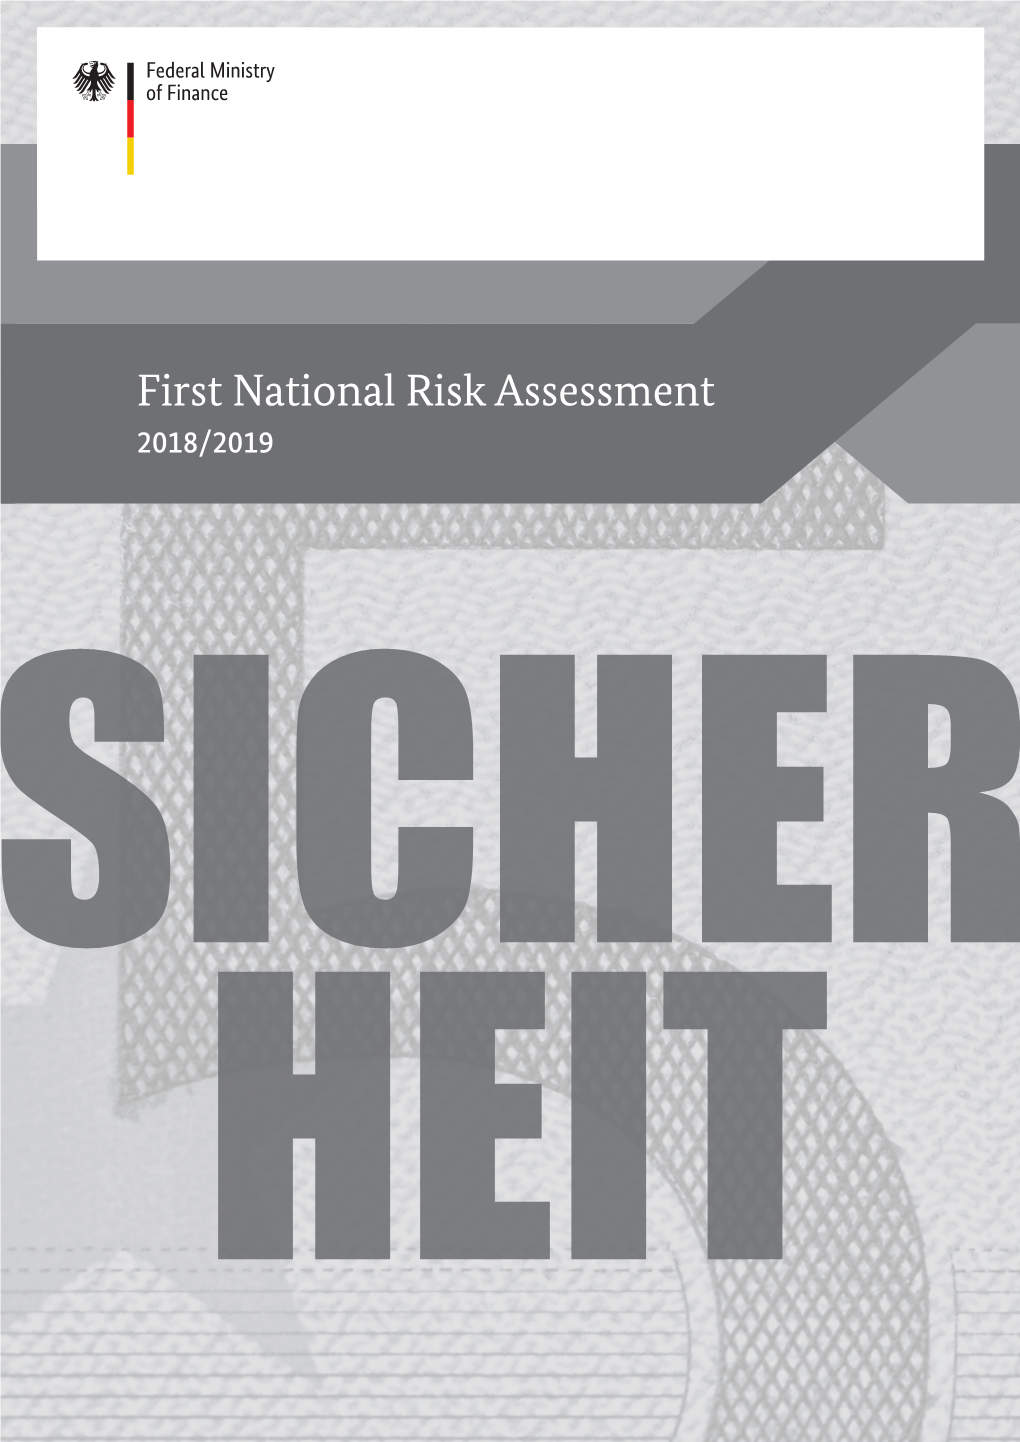 First National Risk Assessment 2018/2019